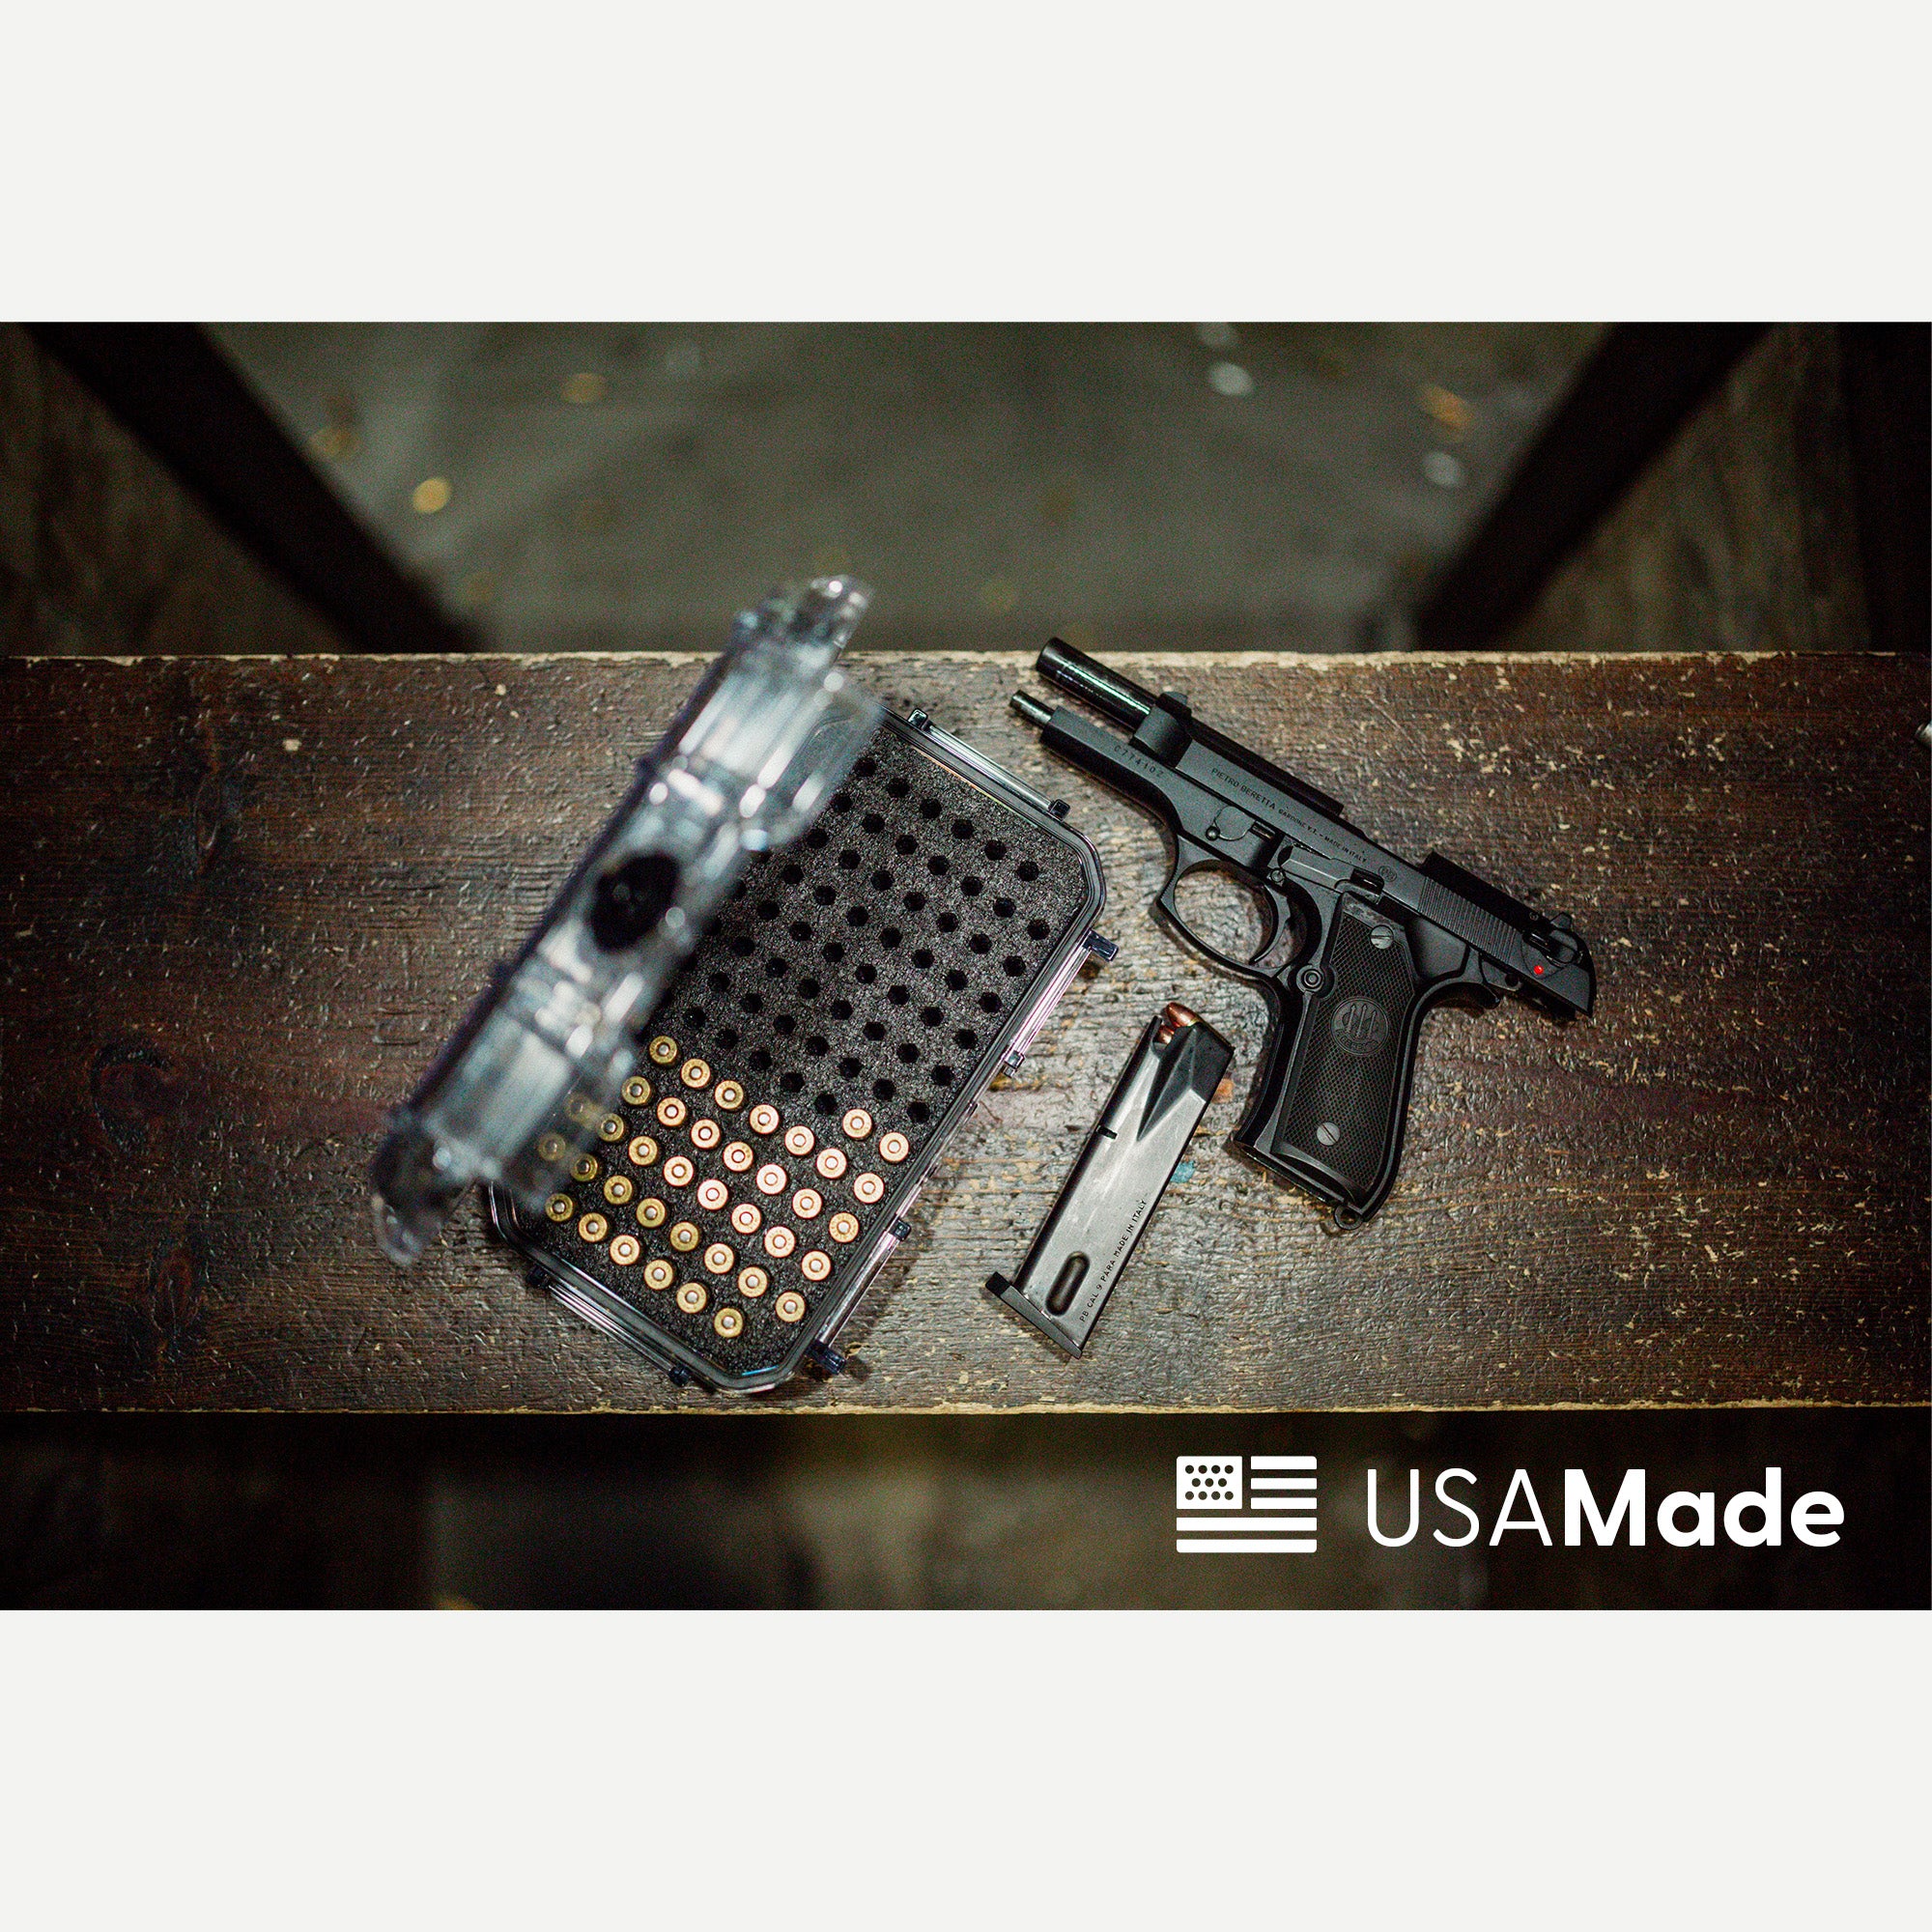 Evergreen 56 Pro USA Pistol Ammo w/ARIDZONE